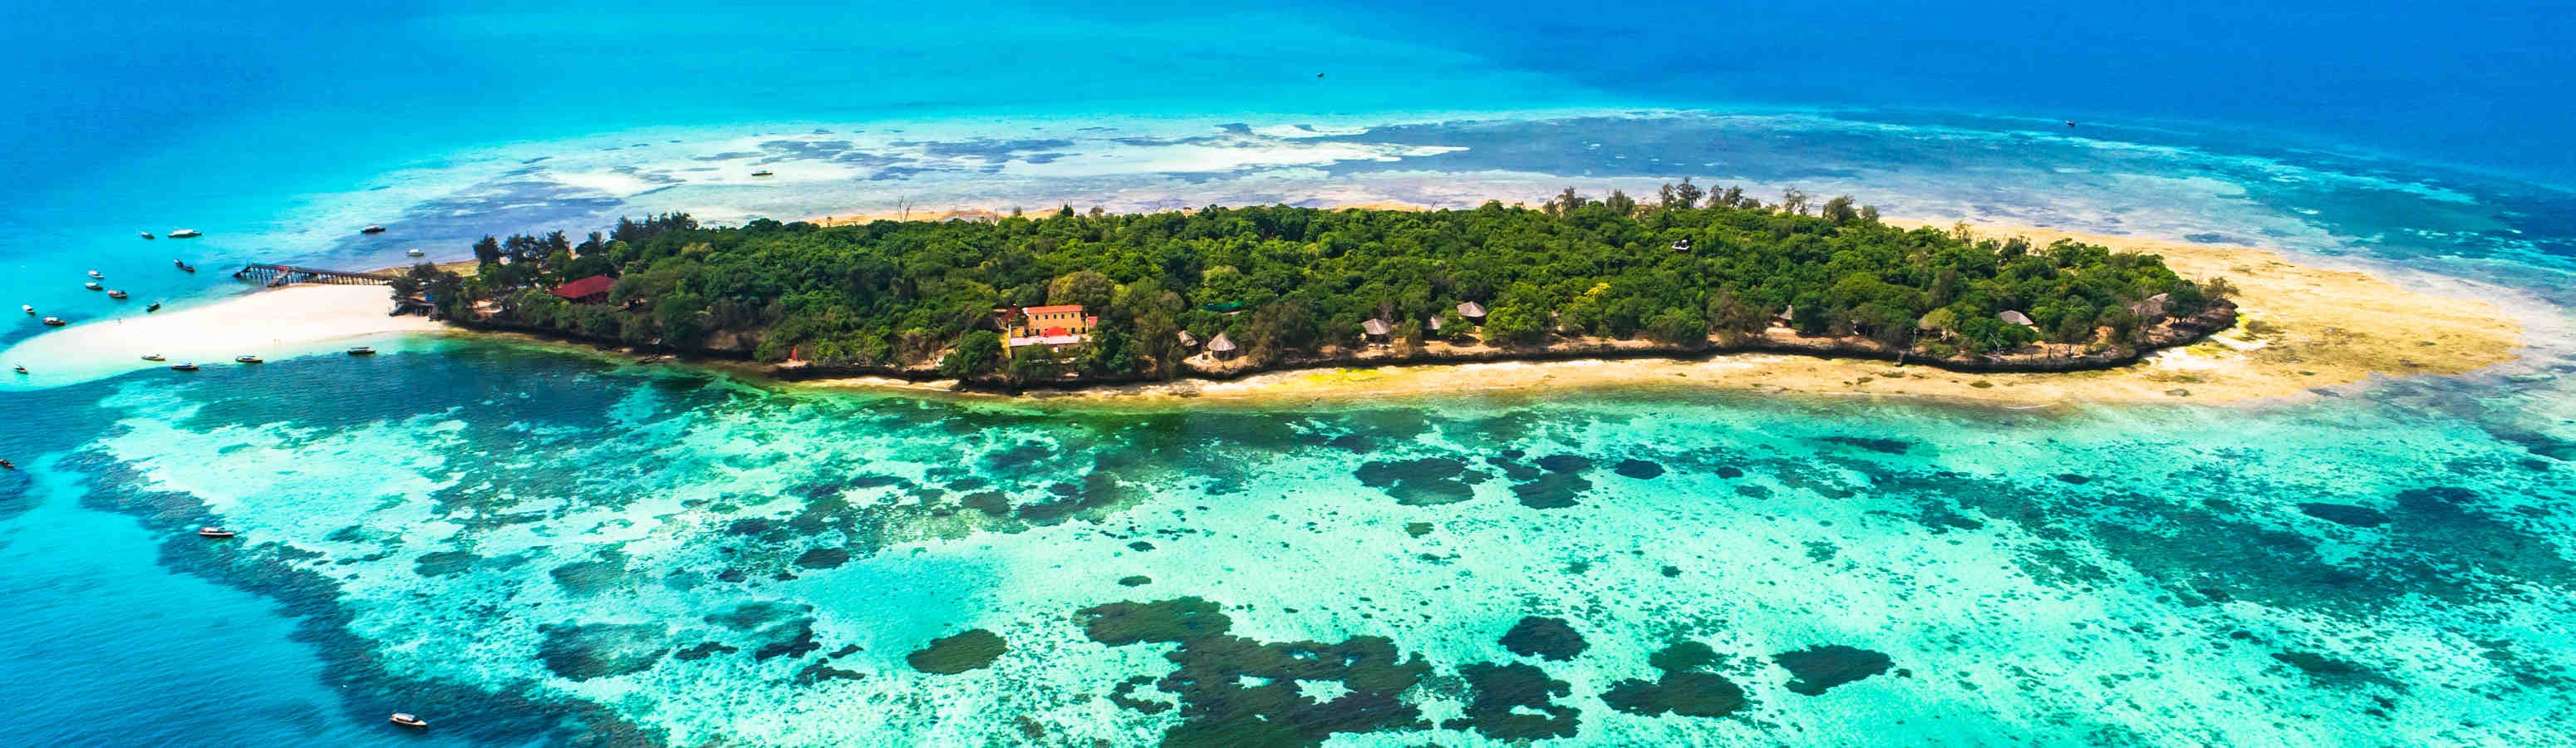 Vacanza al mare a Zanzibar